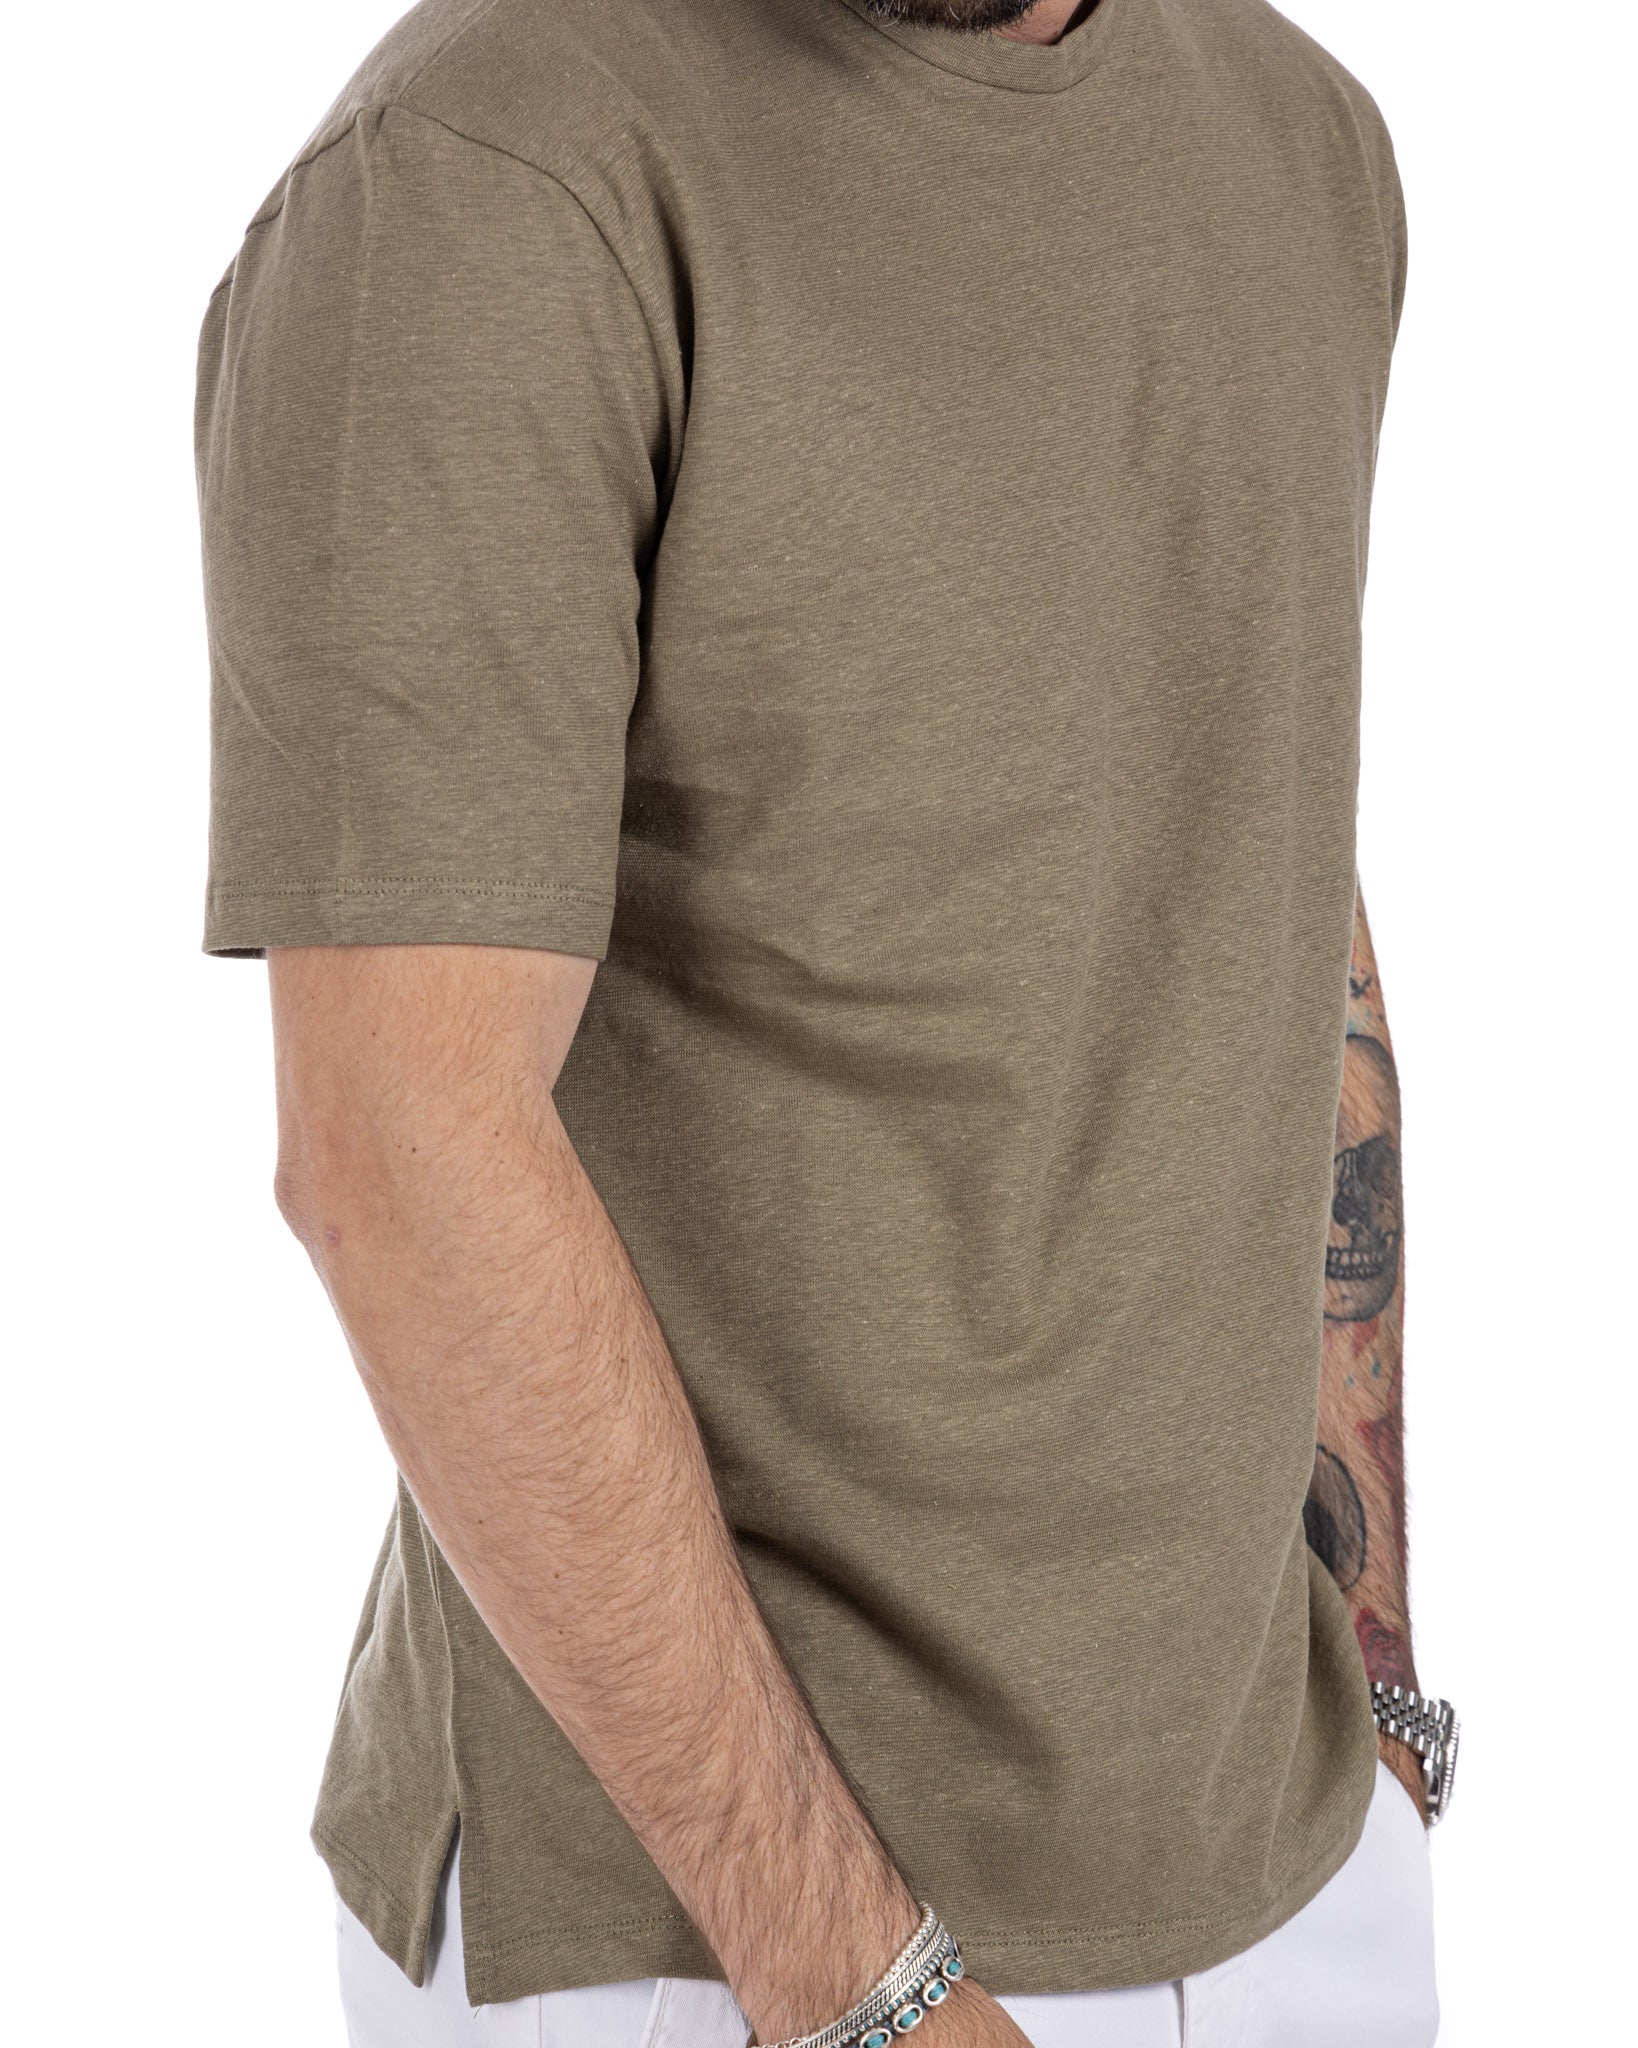 Favignana - military linen t-shirt